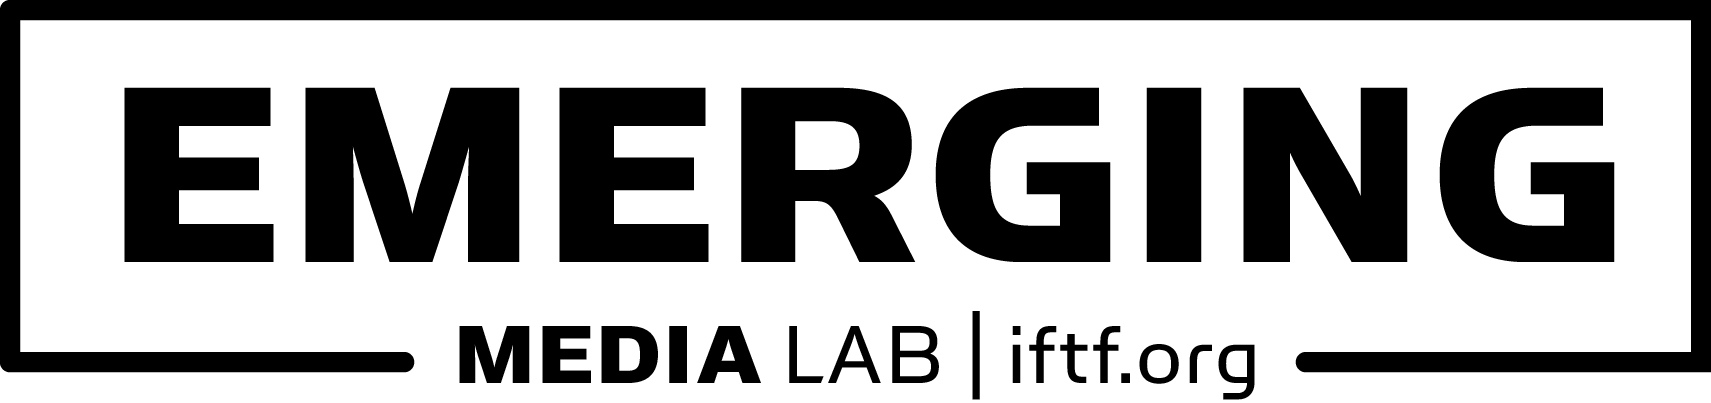 Emerging Media Lab logo